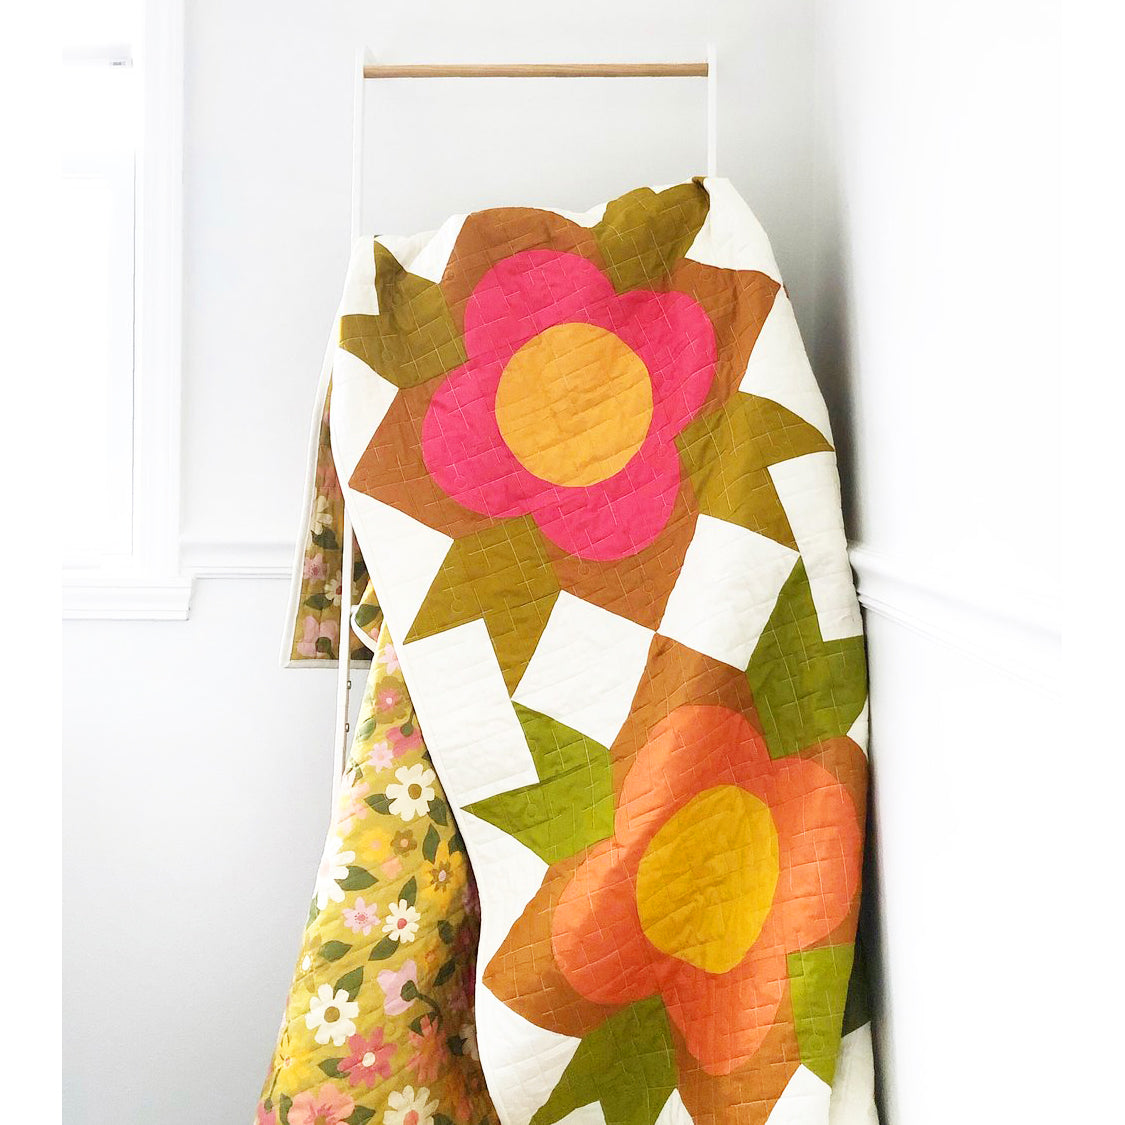 Flower Shop - Quilt Pattern by Modern Handcraft